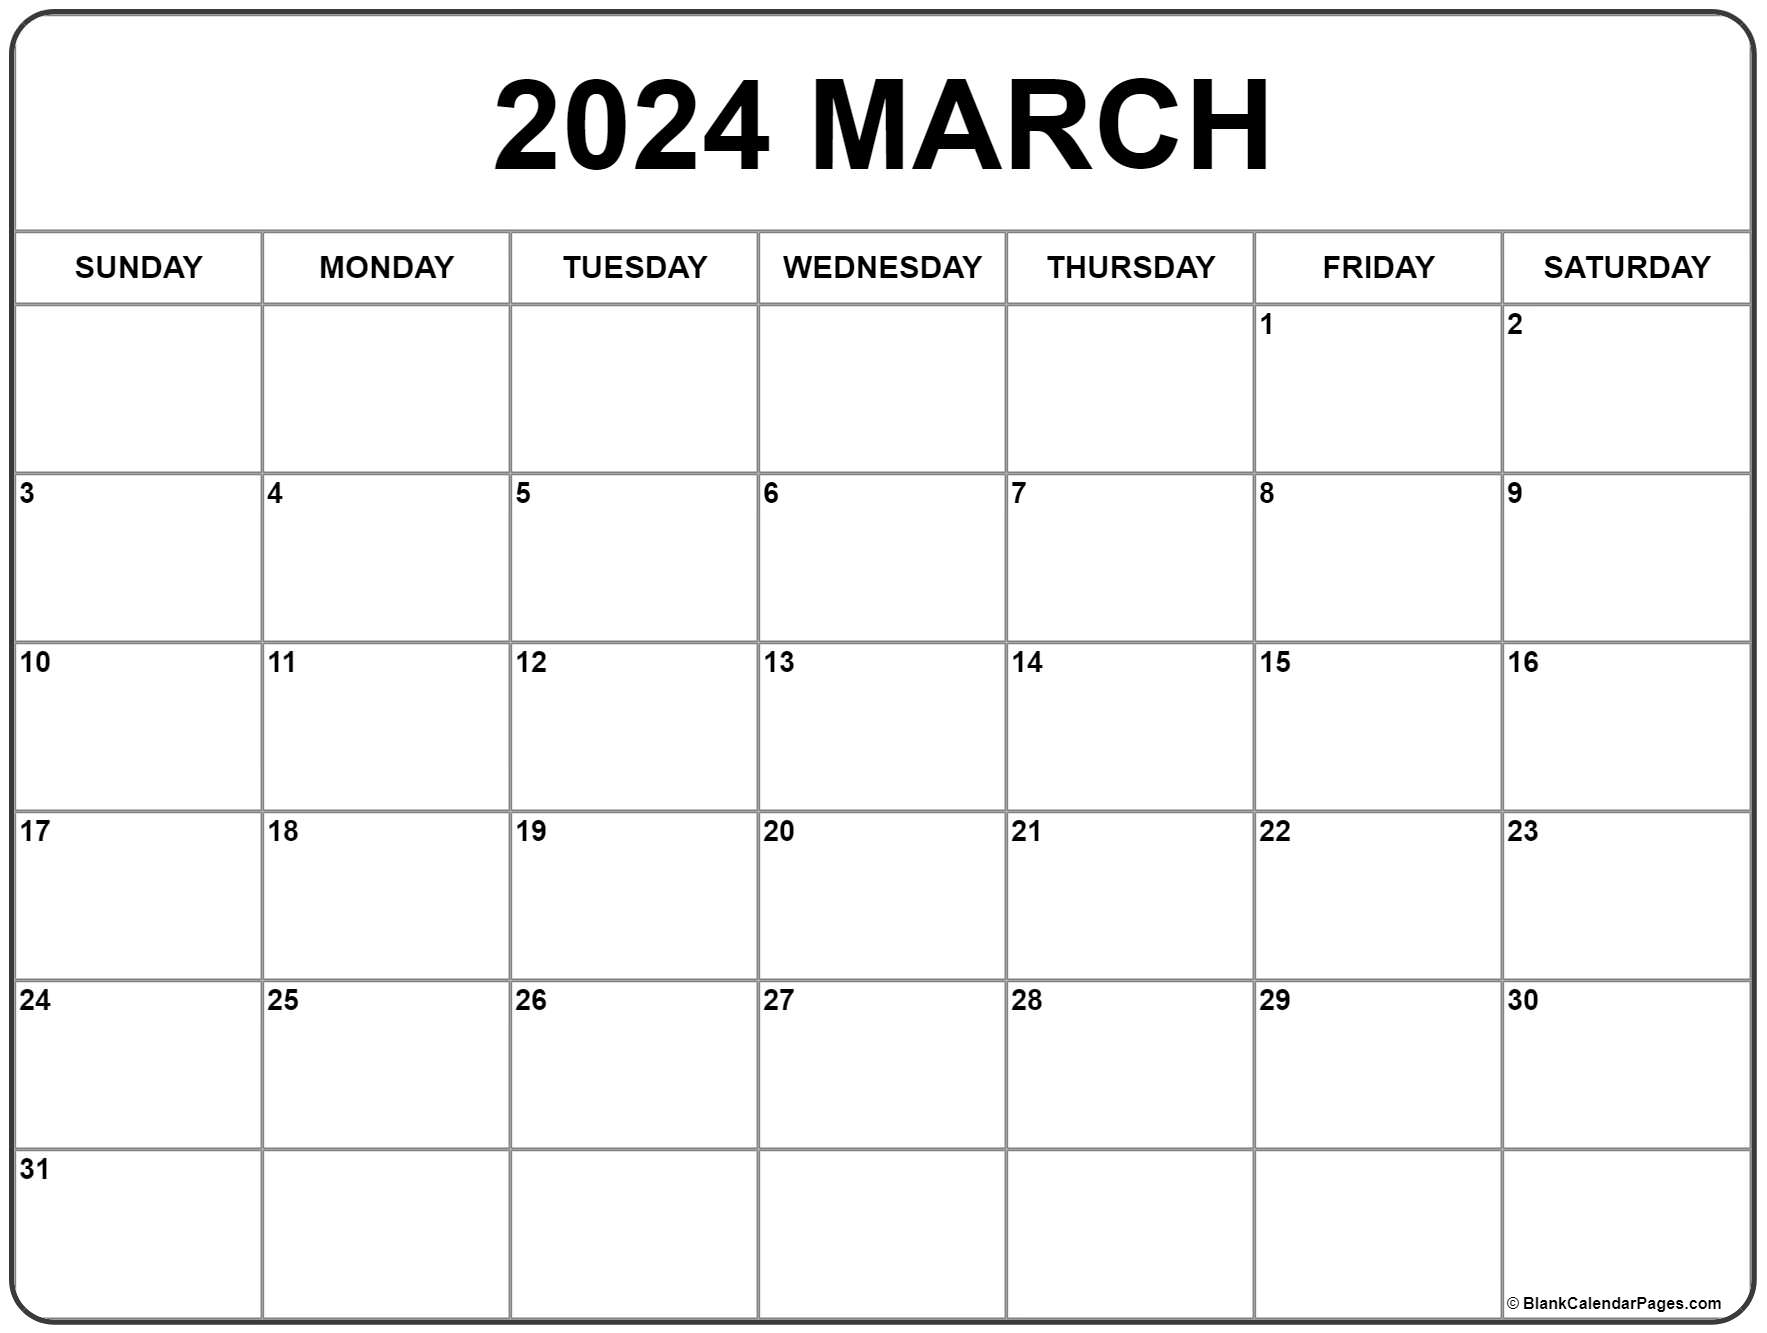 Free Printable March Calendar 2022 March 2022 Calendar | Free Printable Calendar Templates